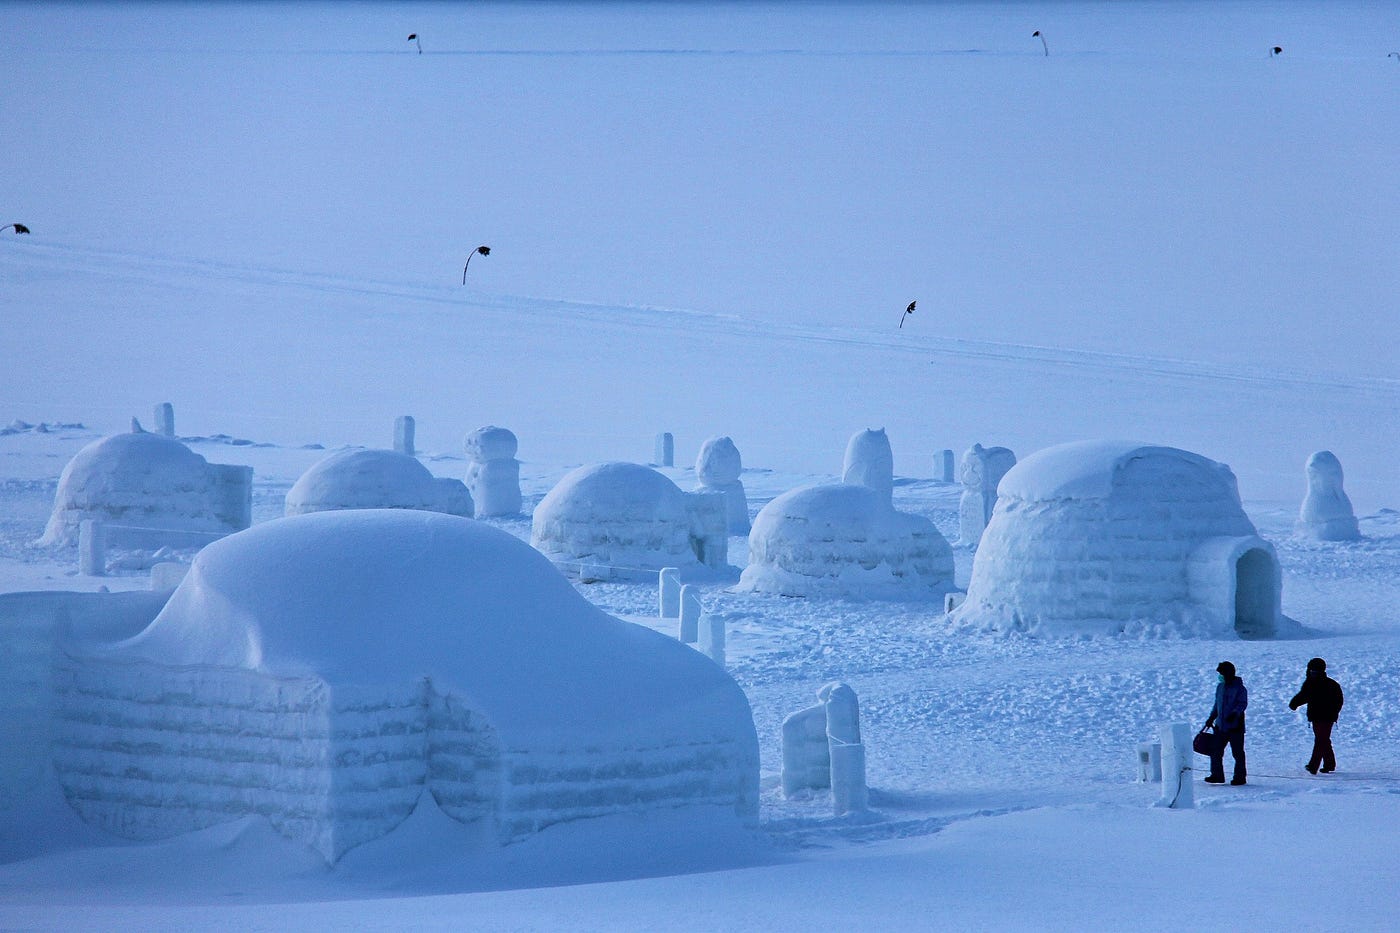 Regina man takes advantage of winter by building igloo in backyard